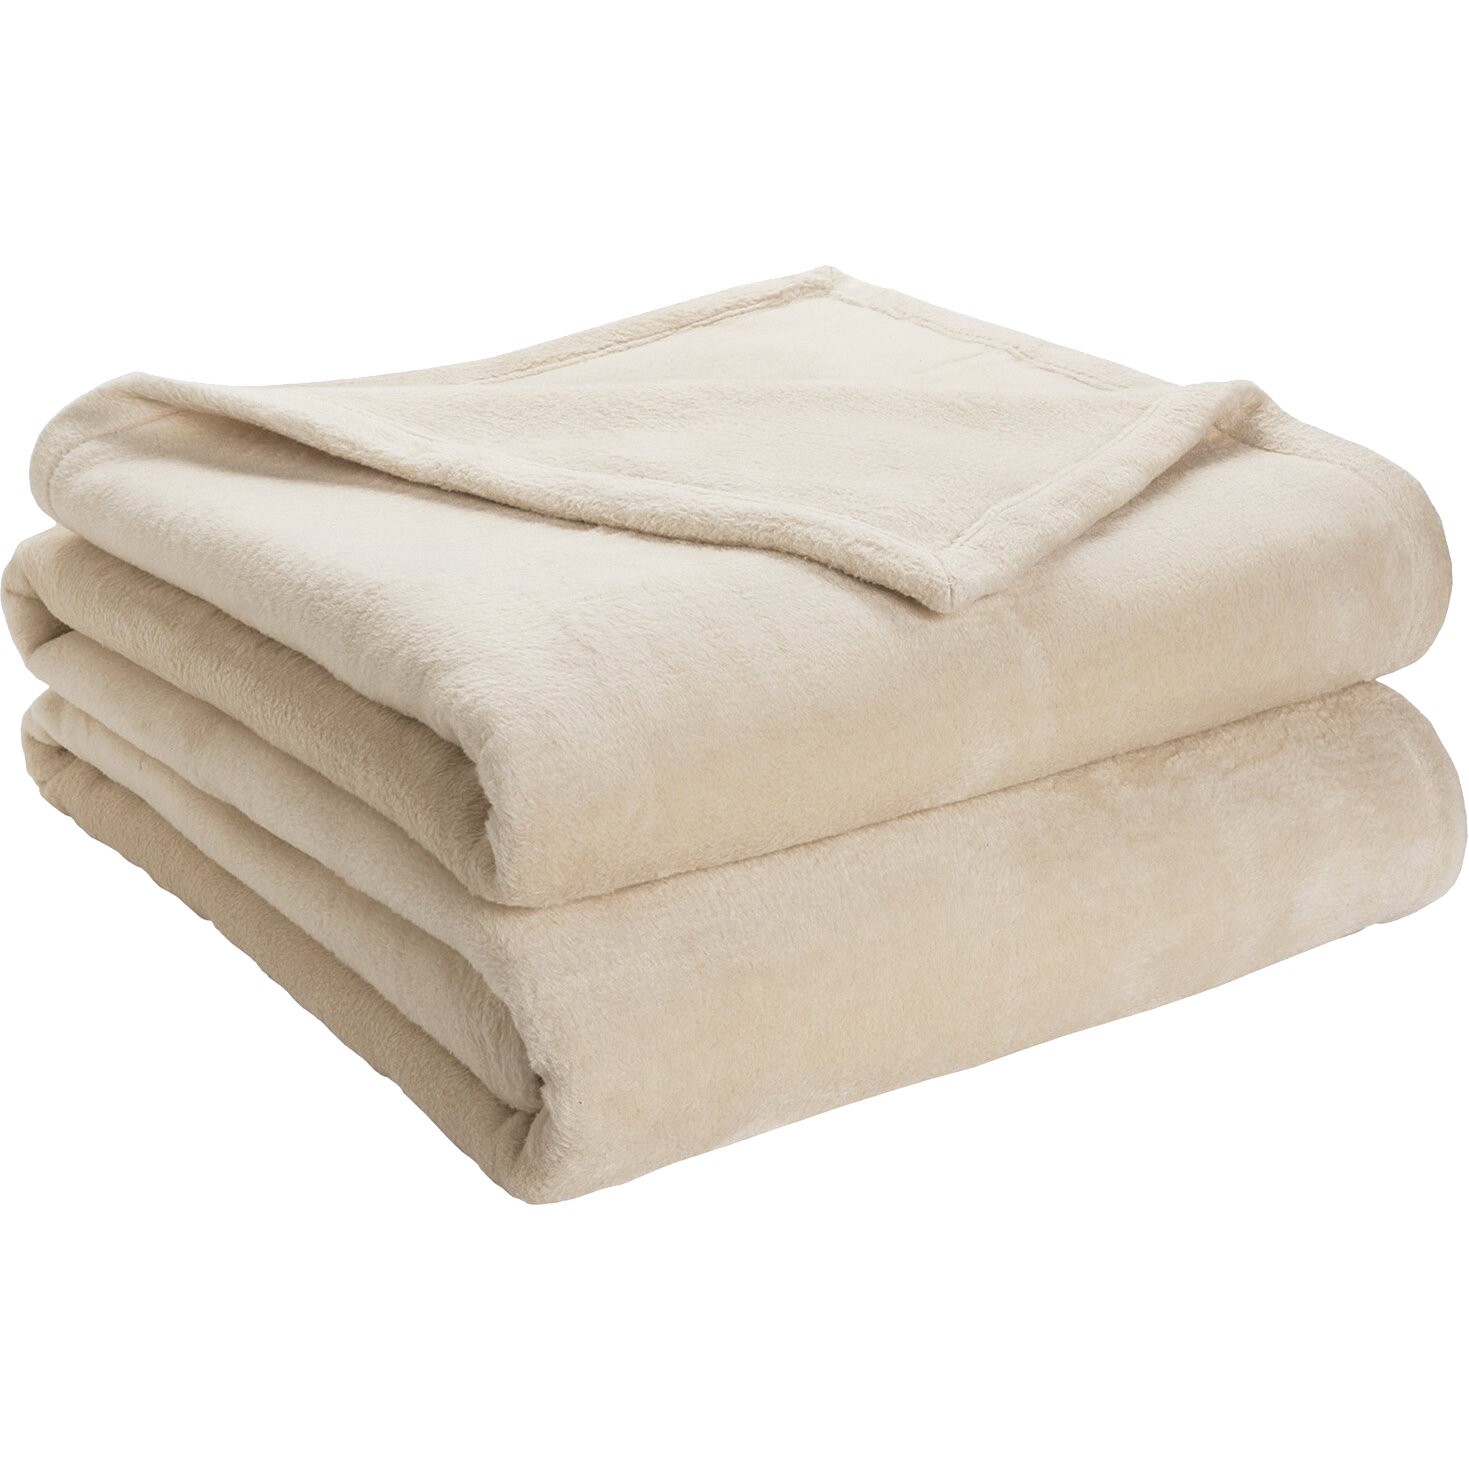 Wekold Soft Warm Solid Plush Fleece Blanket Throw Sofa Bedding Blanket Throws